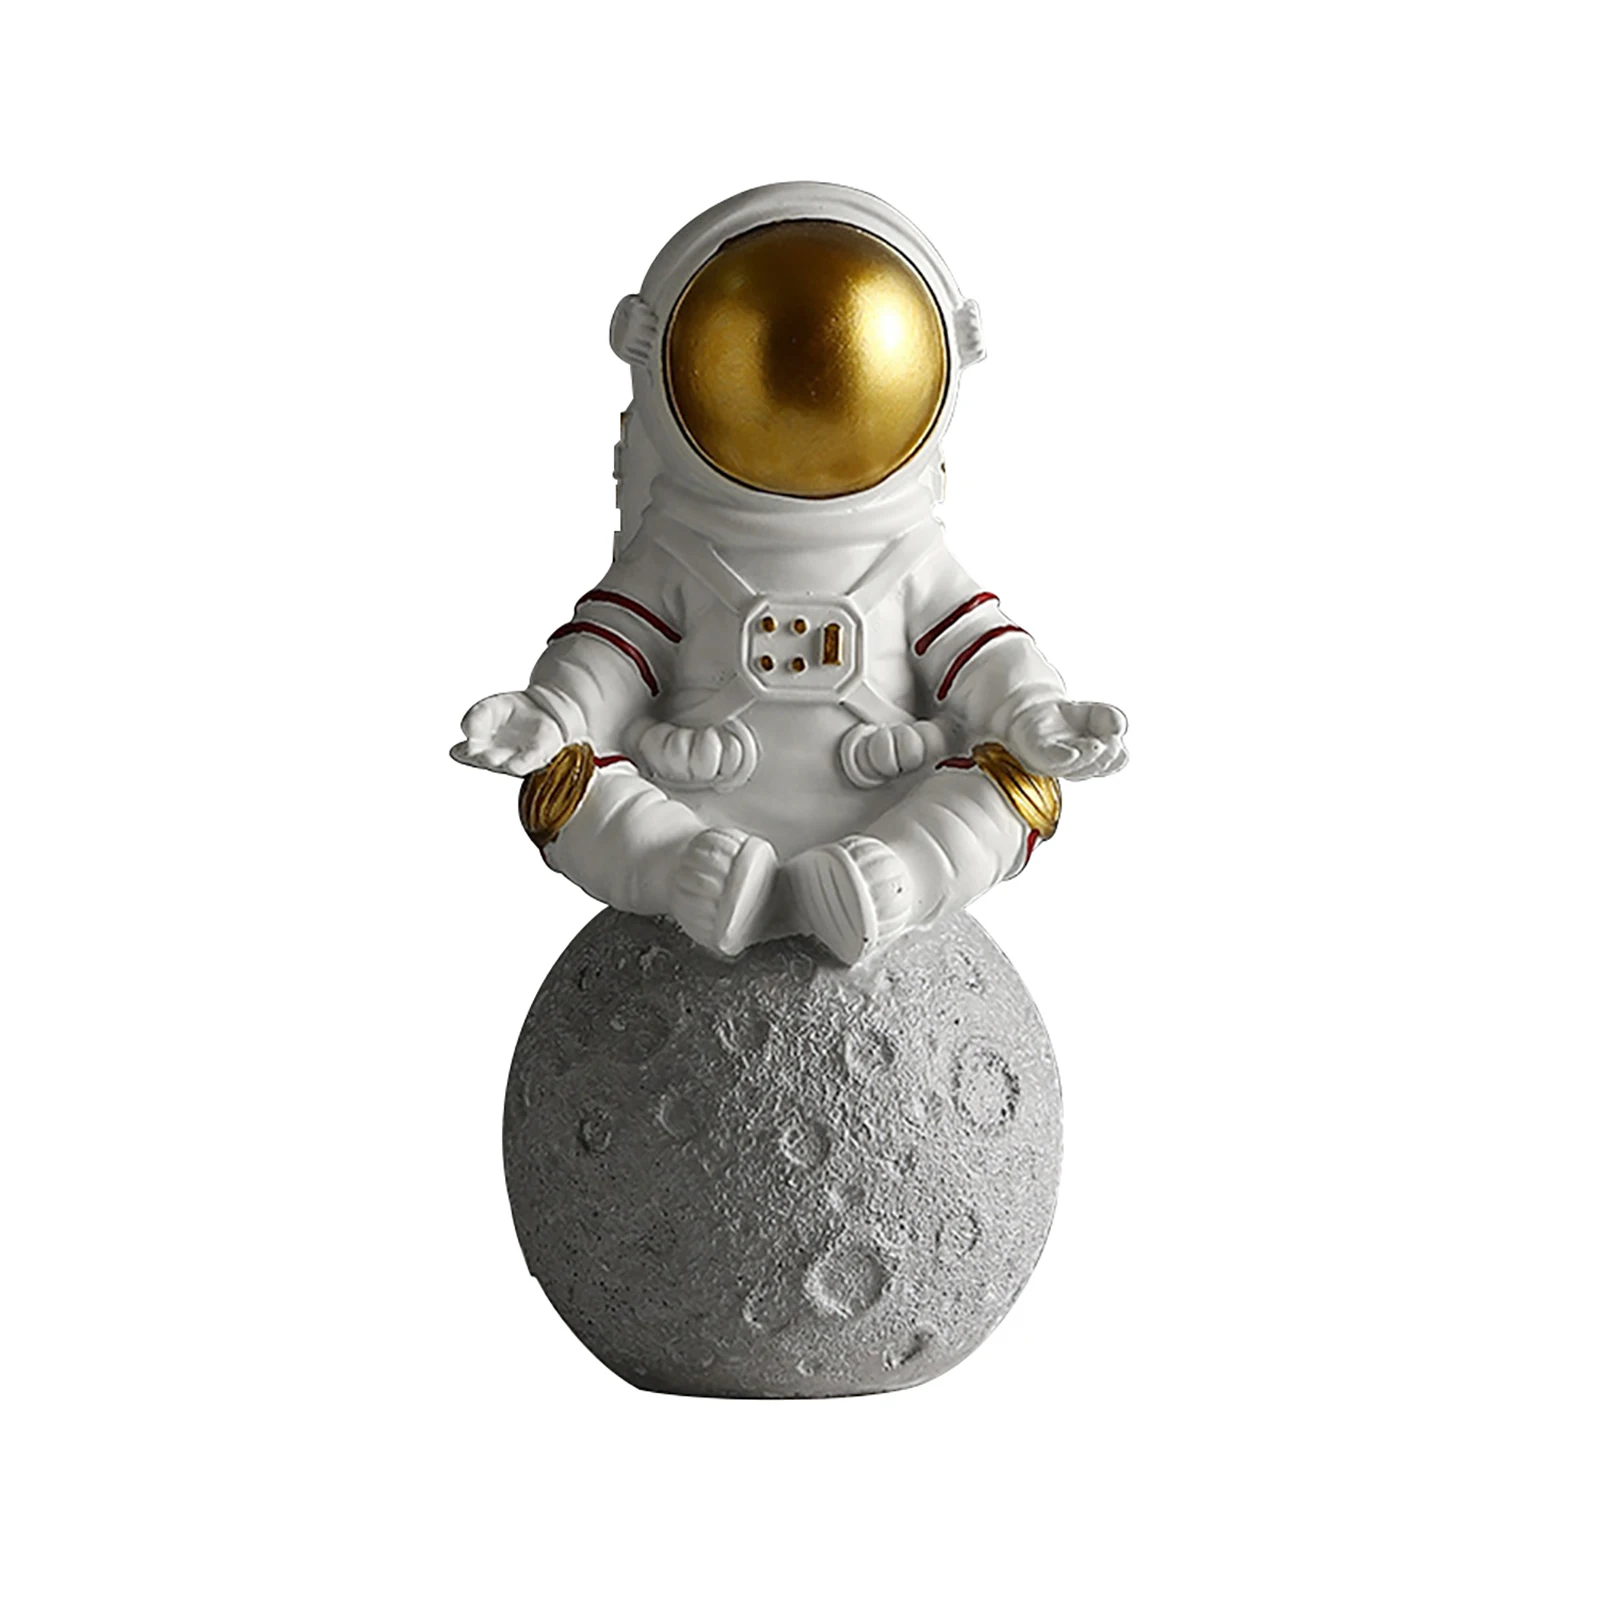 

Sculpture Astronaut Statues Home Decor Crafts Mini Dining Table Office Bedside Miniatures Desktop Accessories Figurine Ornament